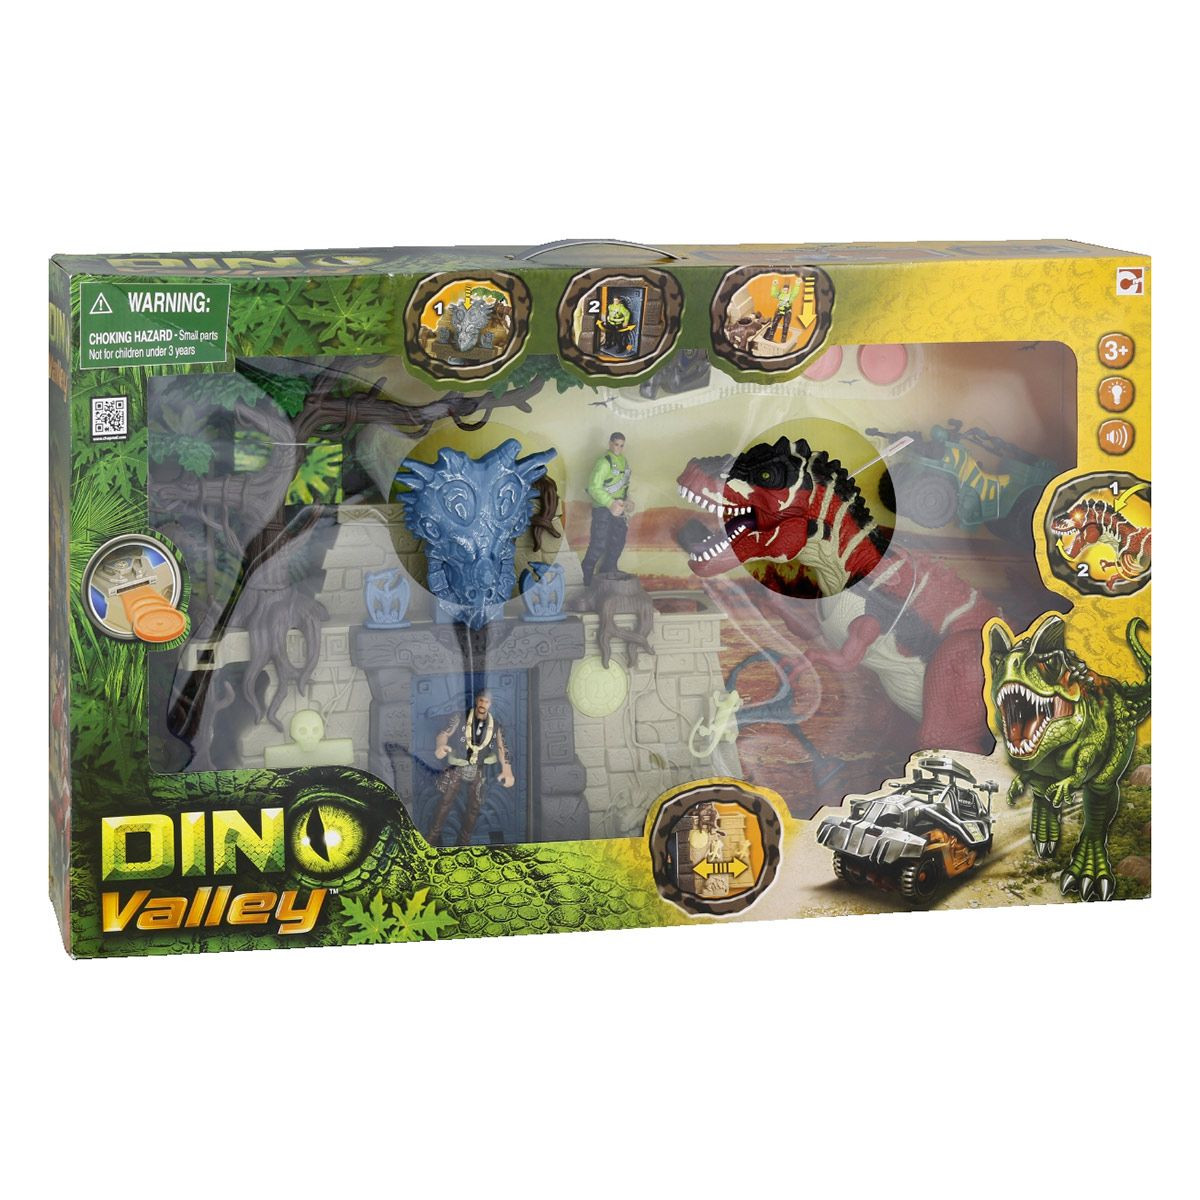 Dino valley jouet club